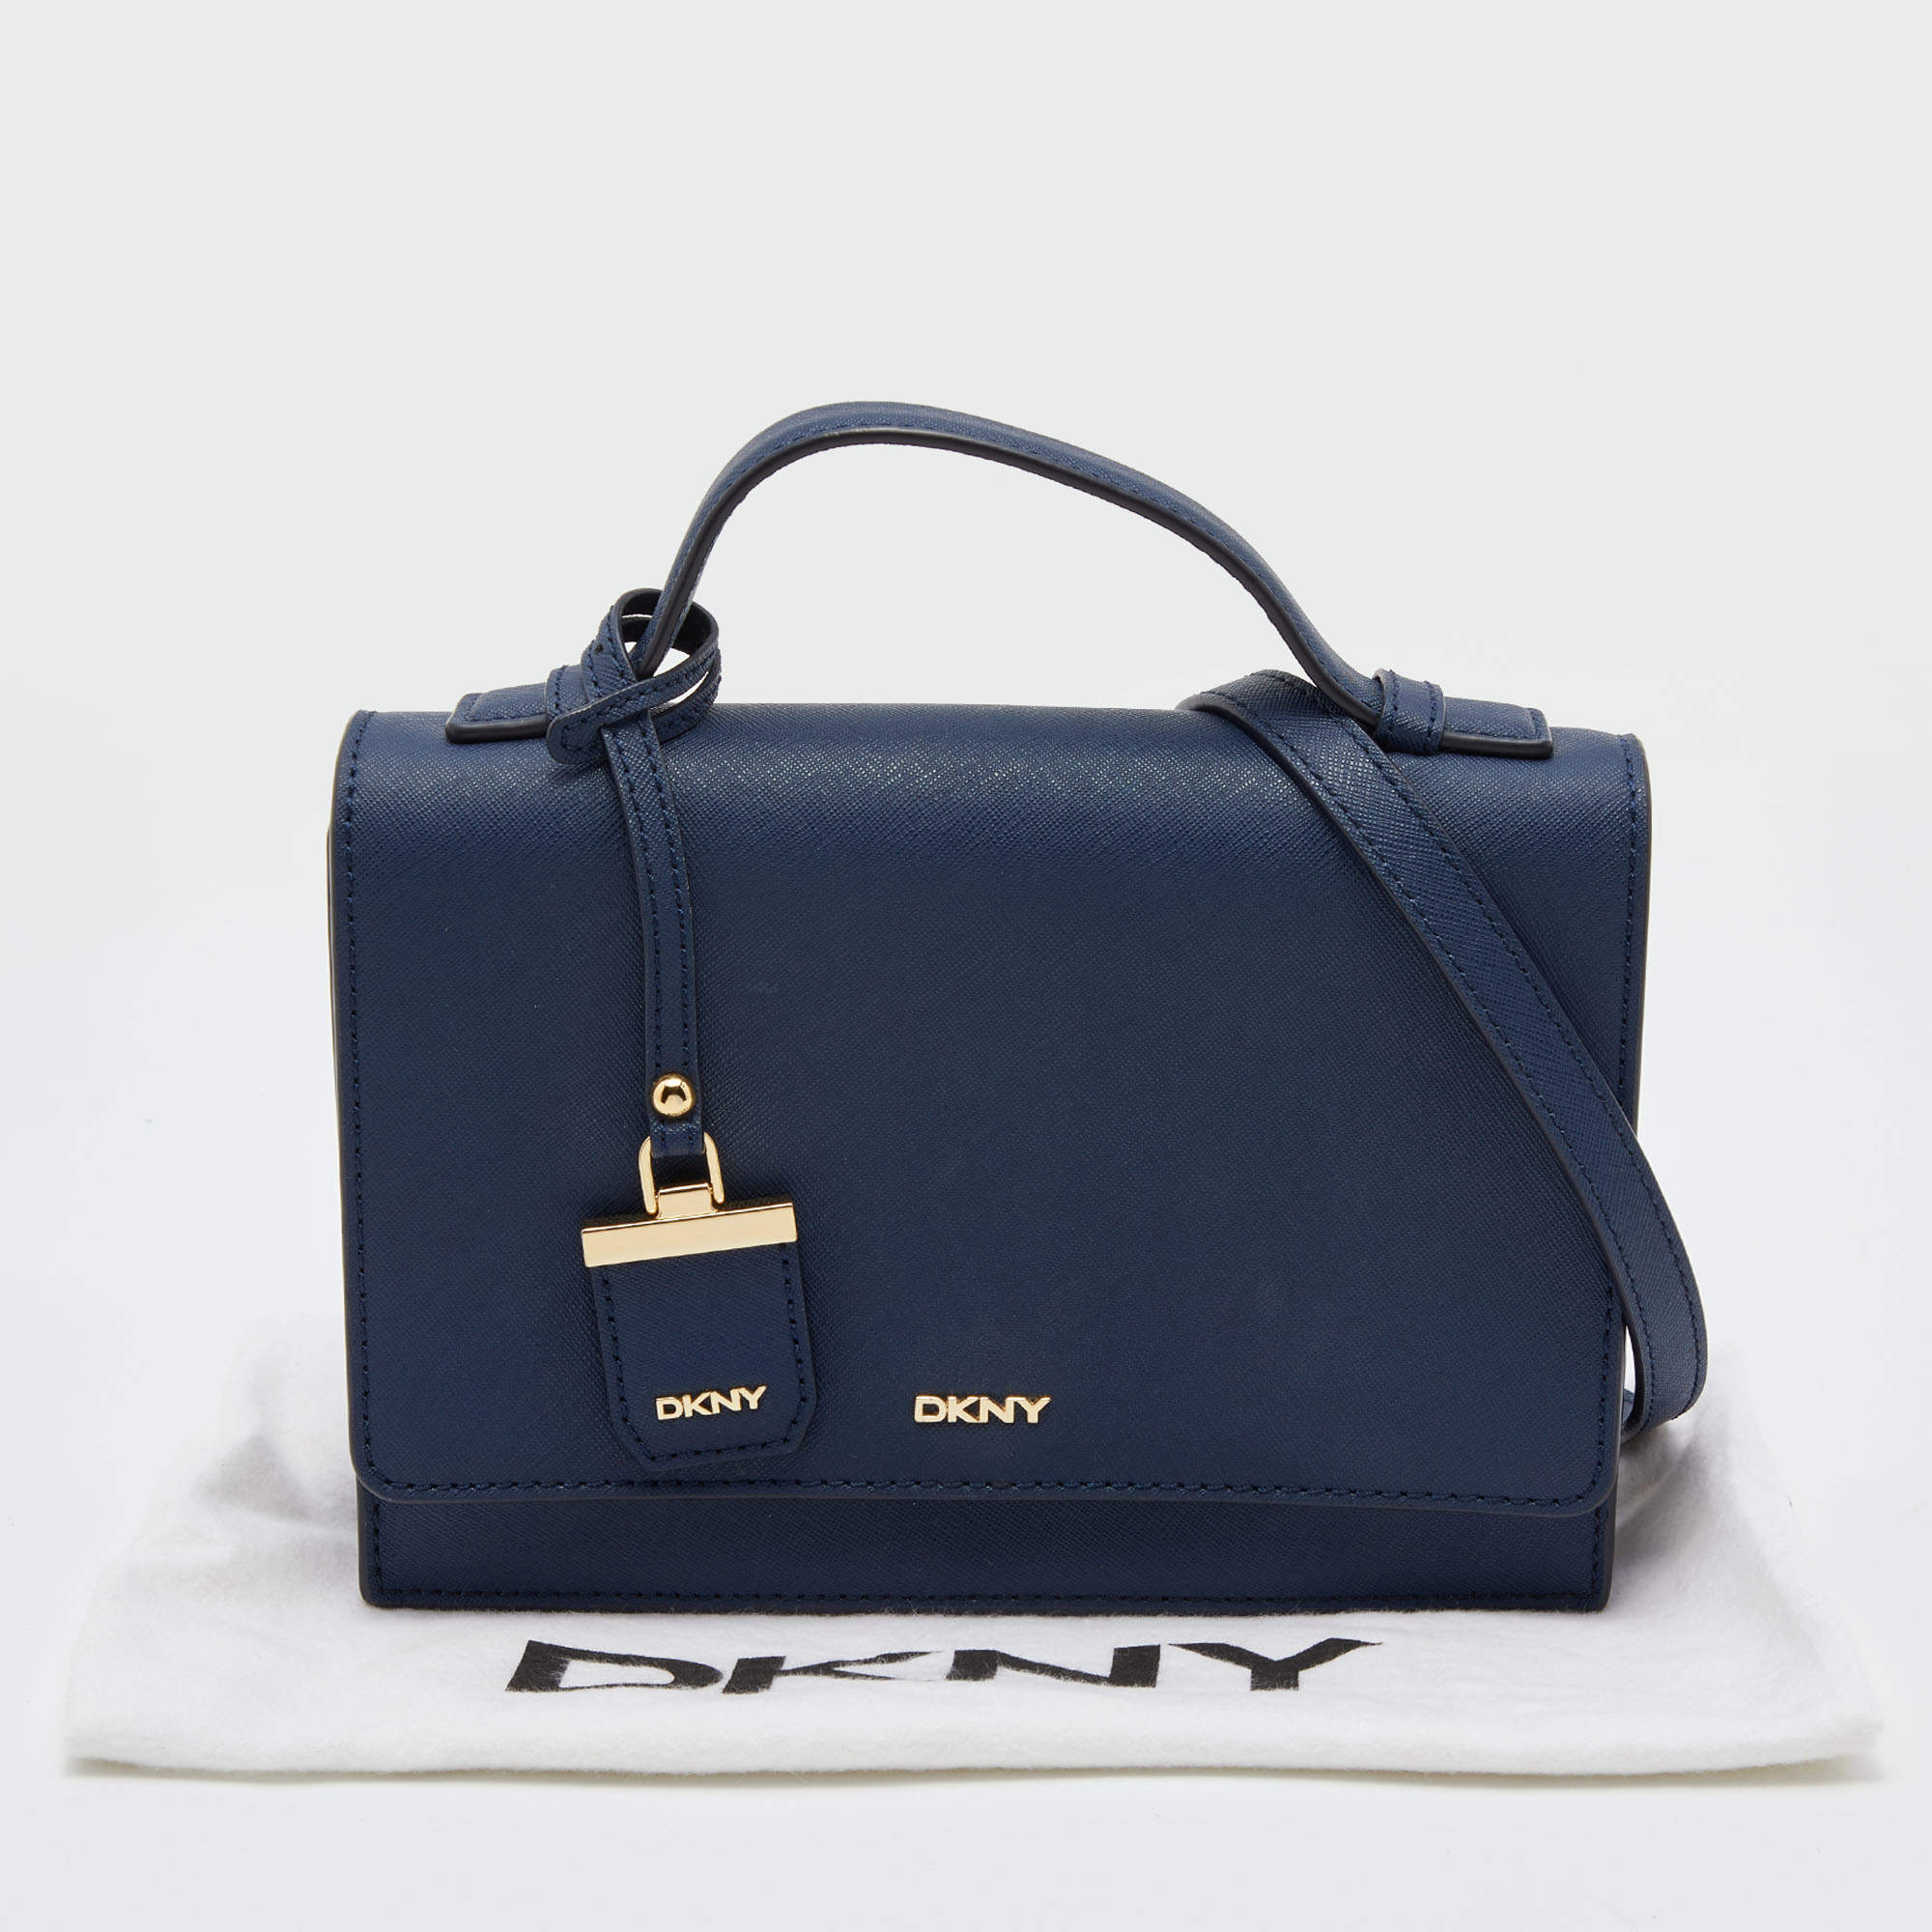 Dkny | Bags | Dkny Handbag Purse Tote Satchel Blue Brown 348 May 204 |  Poshmark